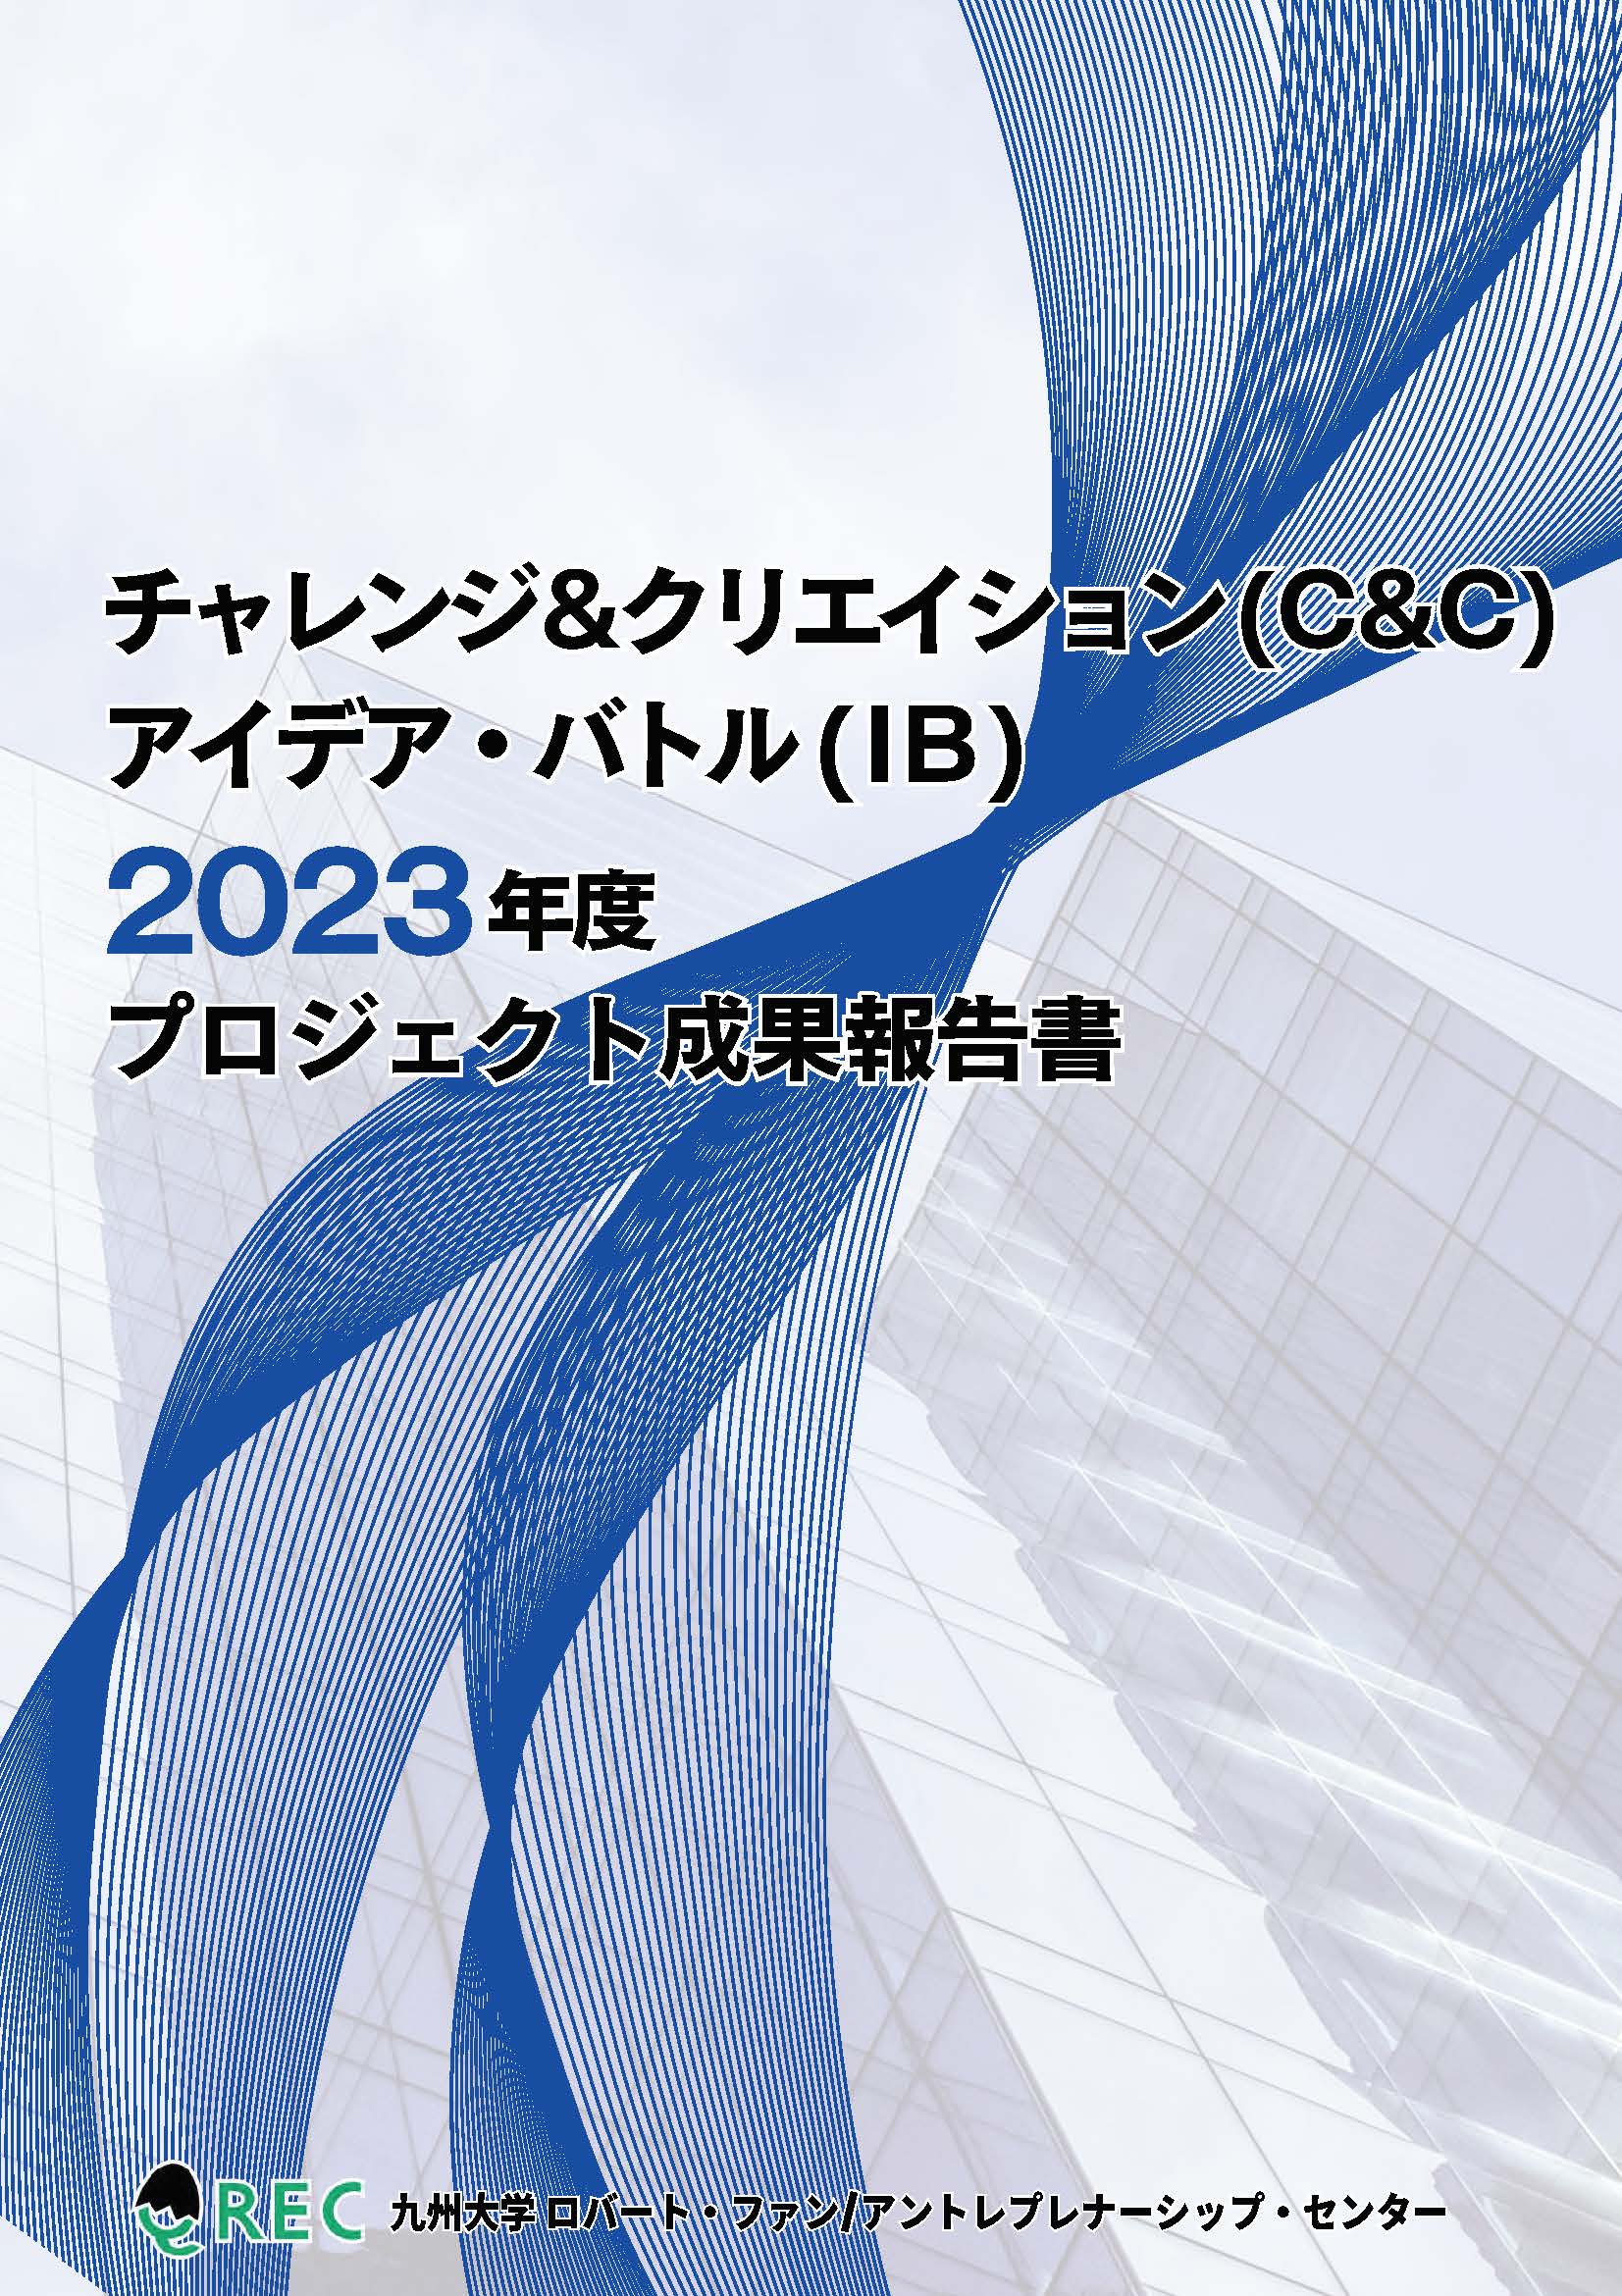 C&C / IB 成果報告書2023